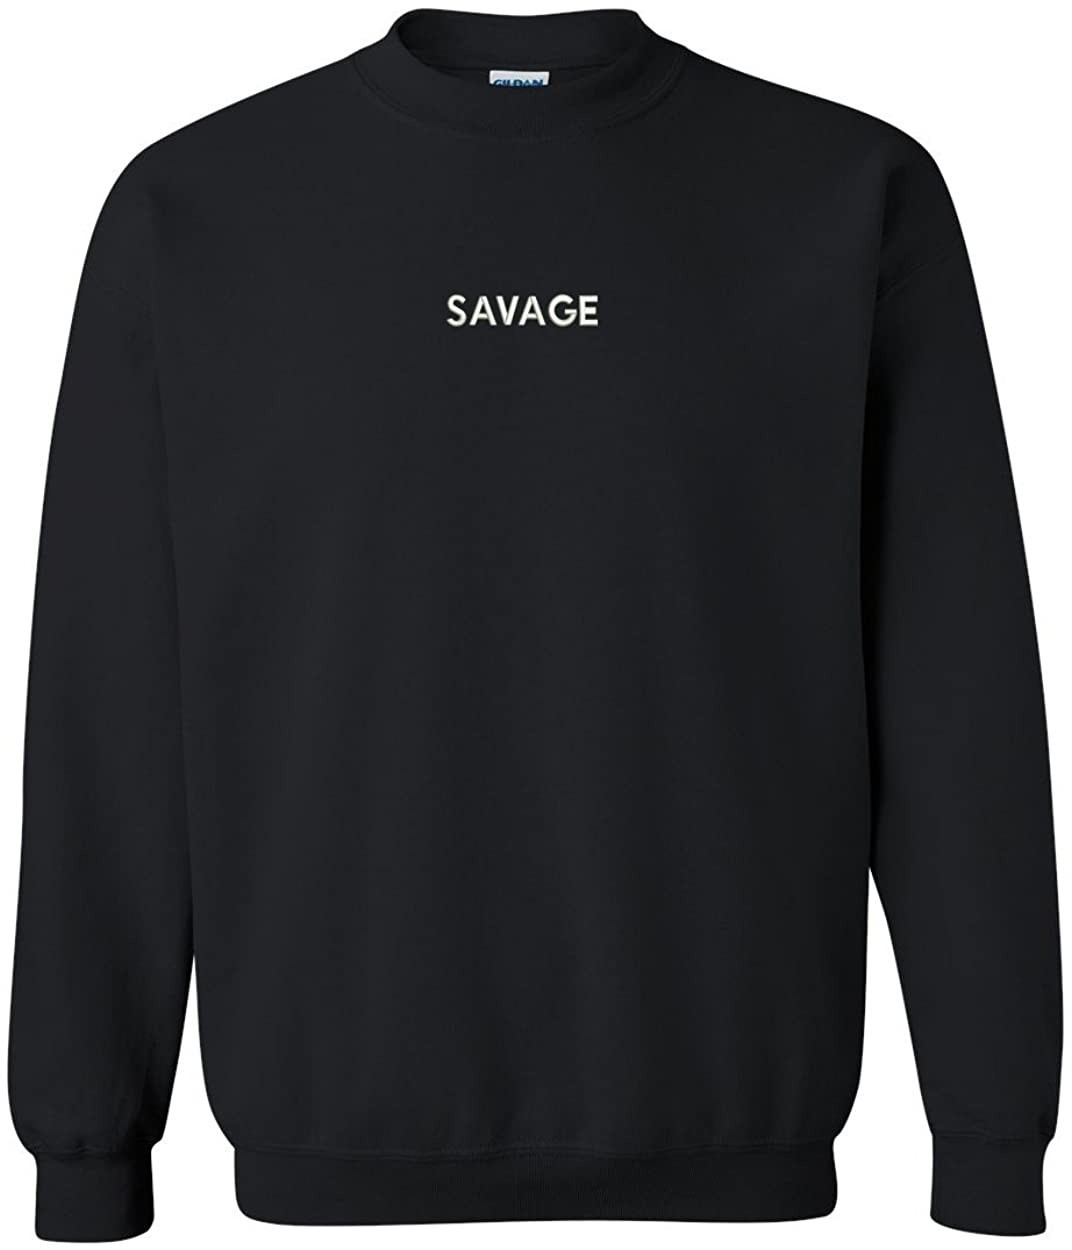 Trendy Apparel Shop Savage Embroidered Crewneck Sweatshirt